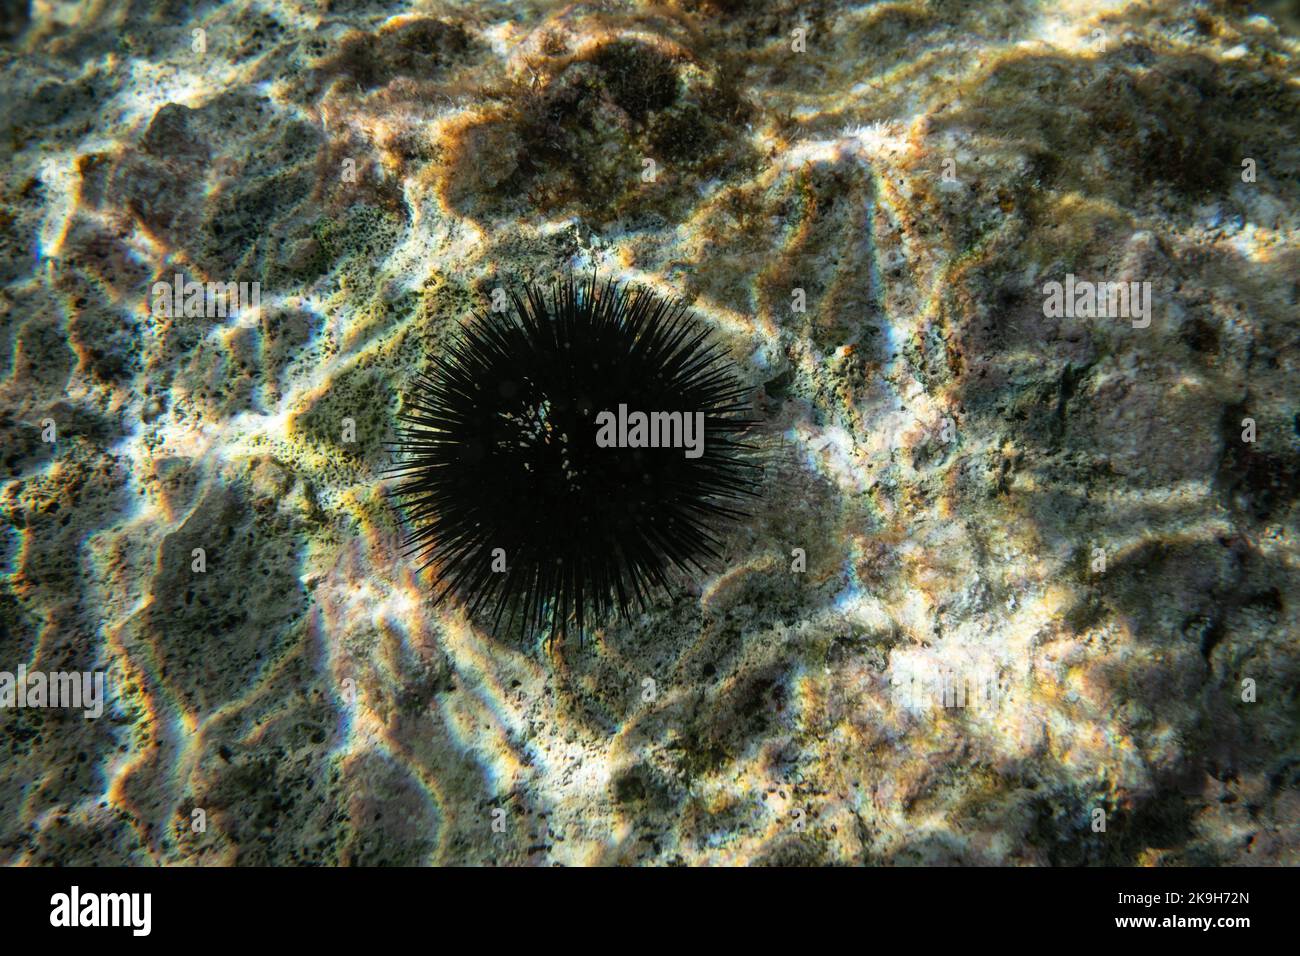 Black sea urchin with many spikes on sun lit rock - underwater closeup photo Stock Photo